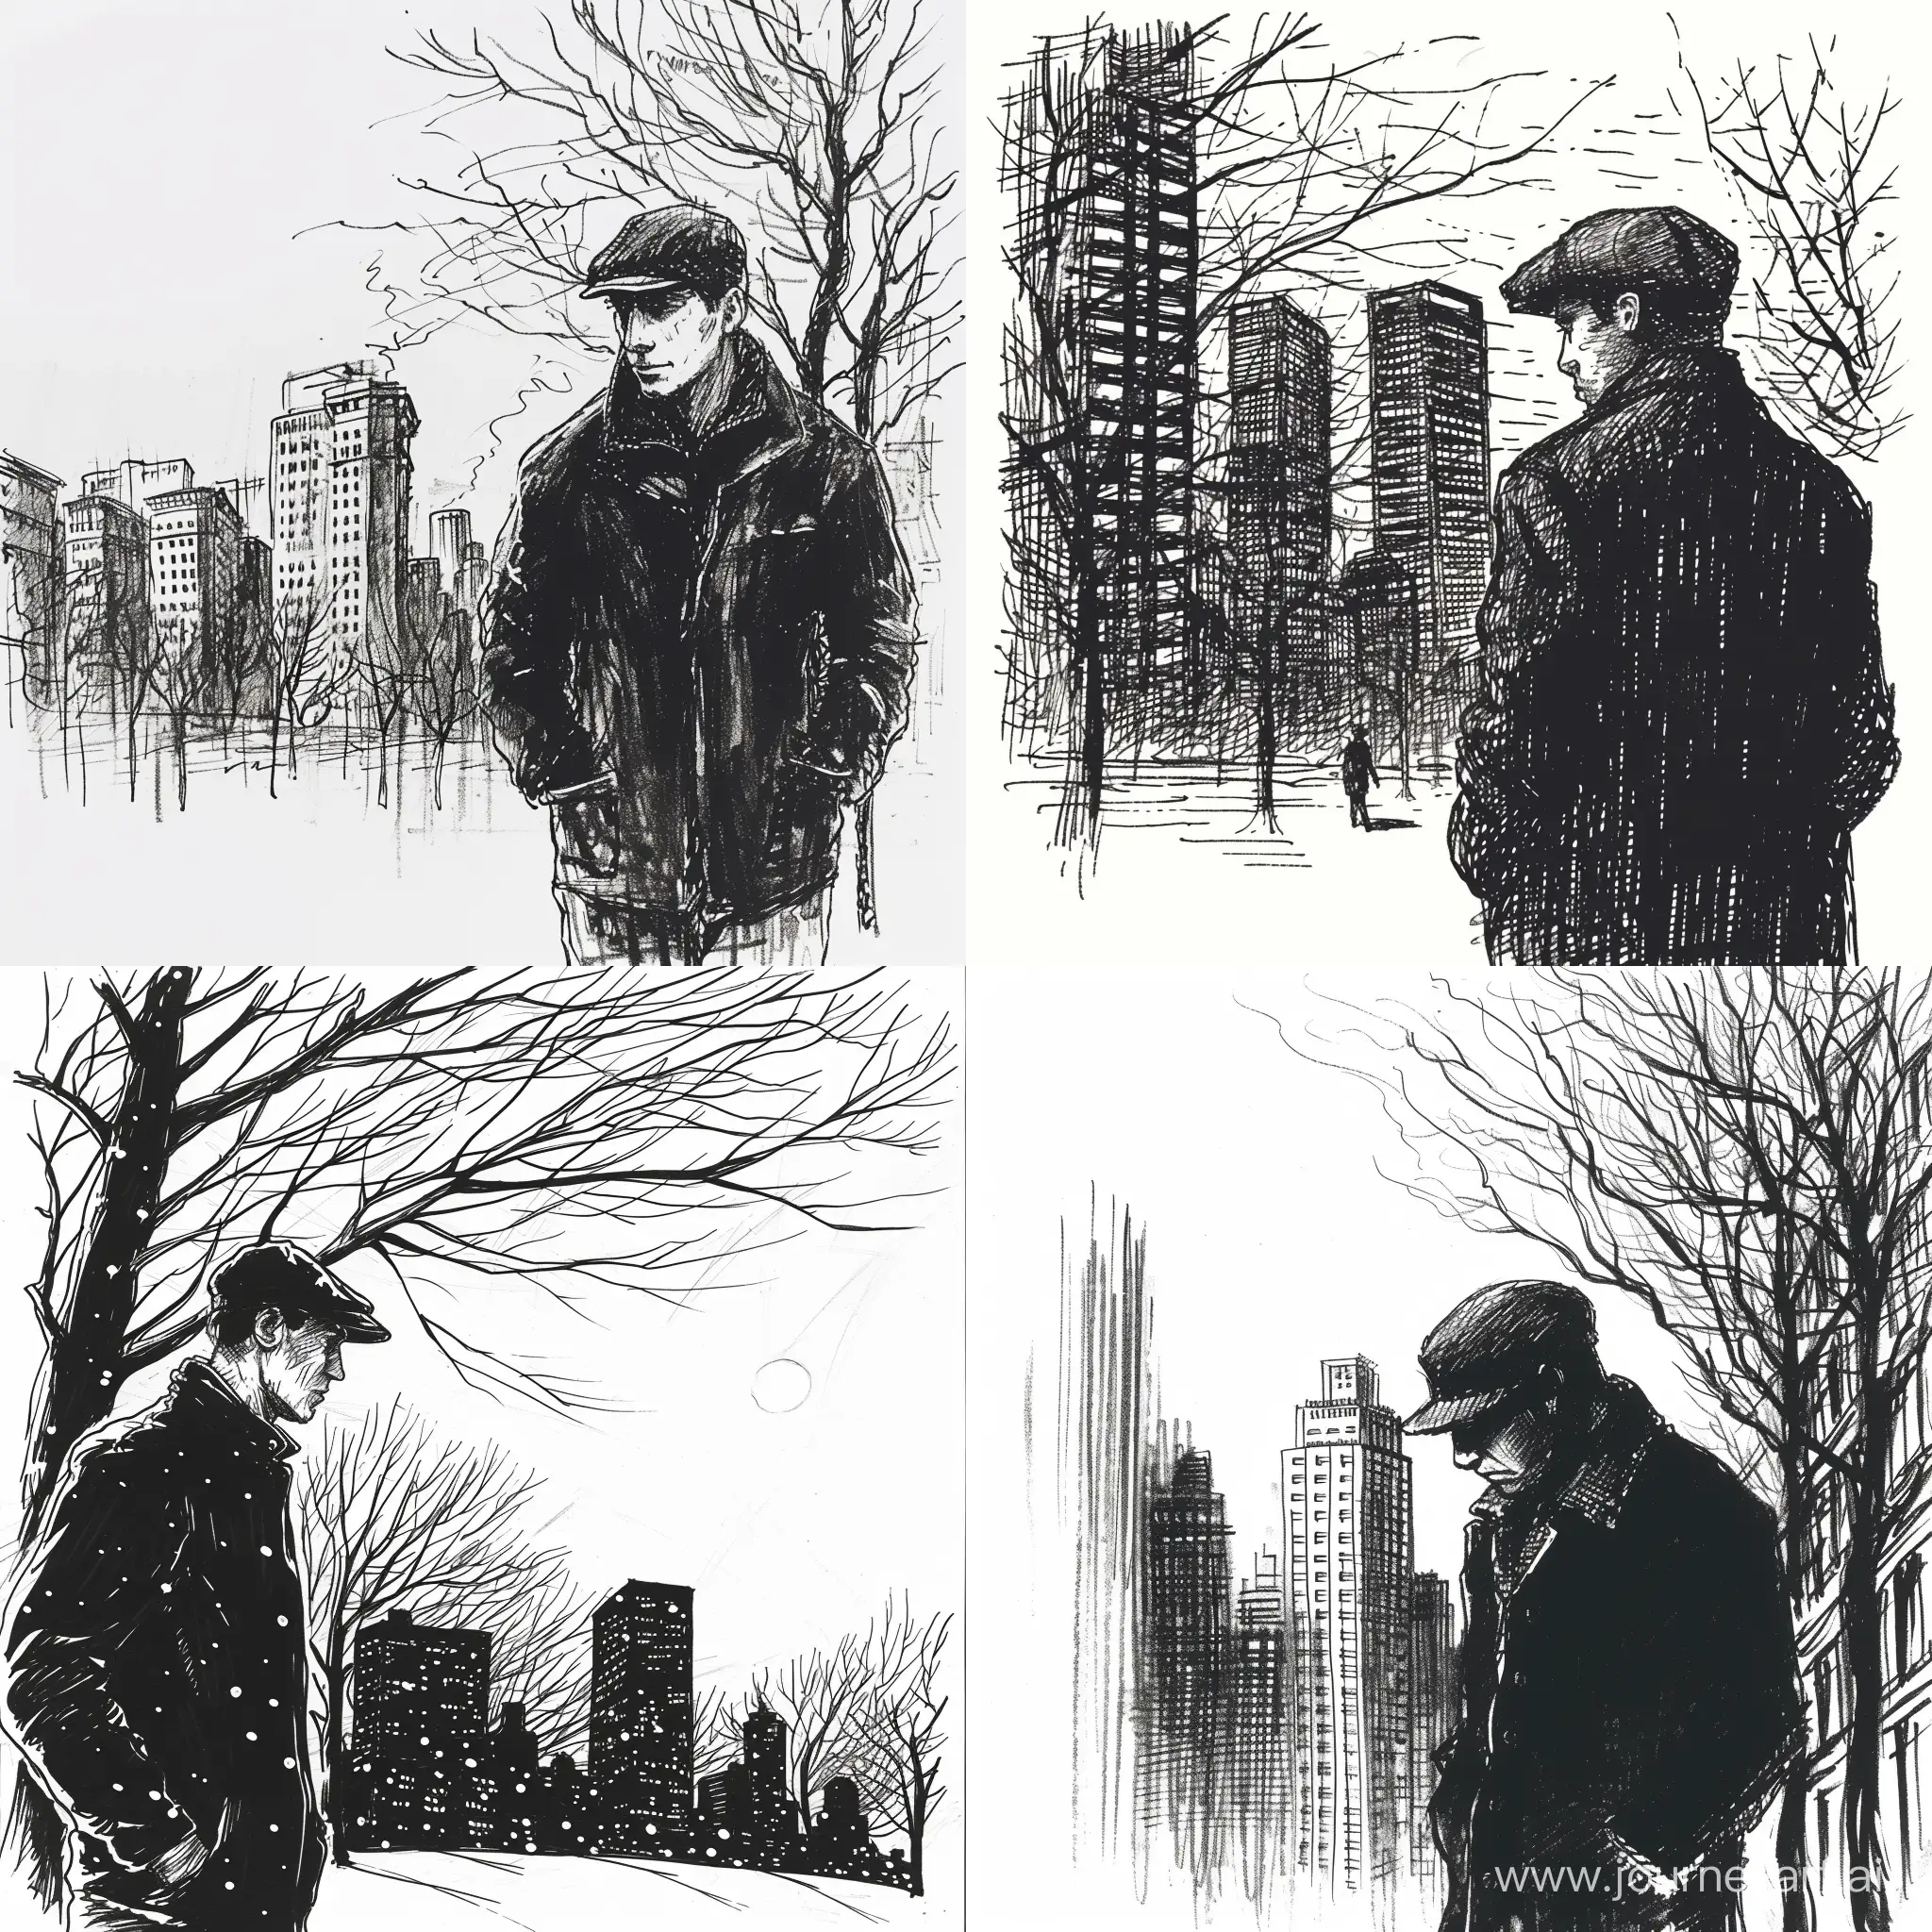 Evening-Stroll-Winter-Scene-with-Man-in-Cap-in-Urban-Setting